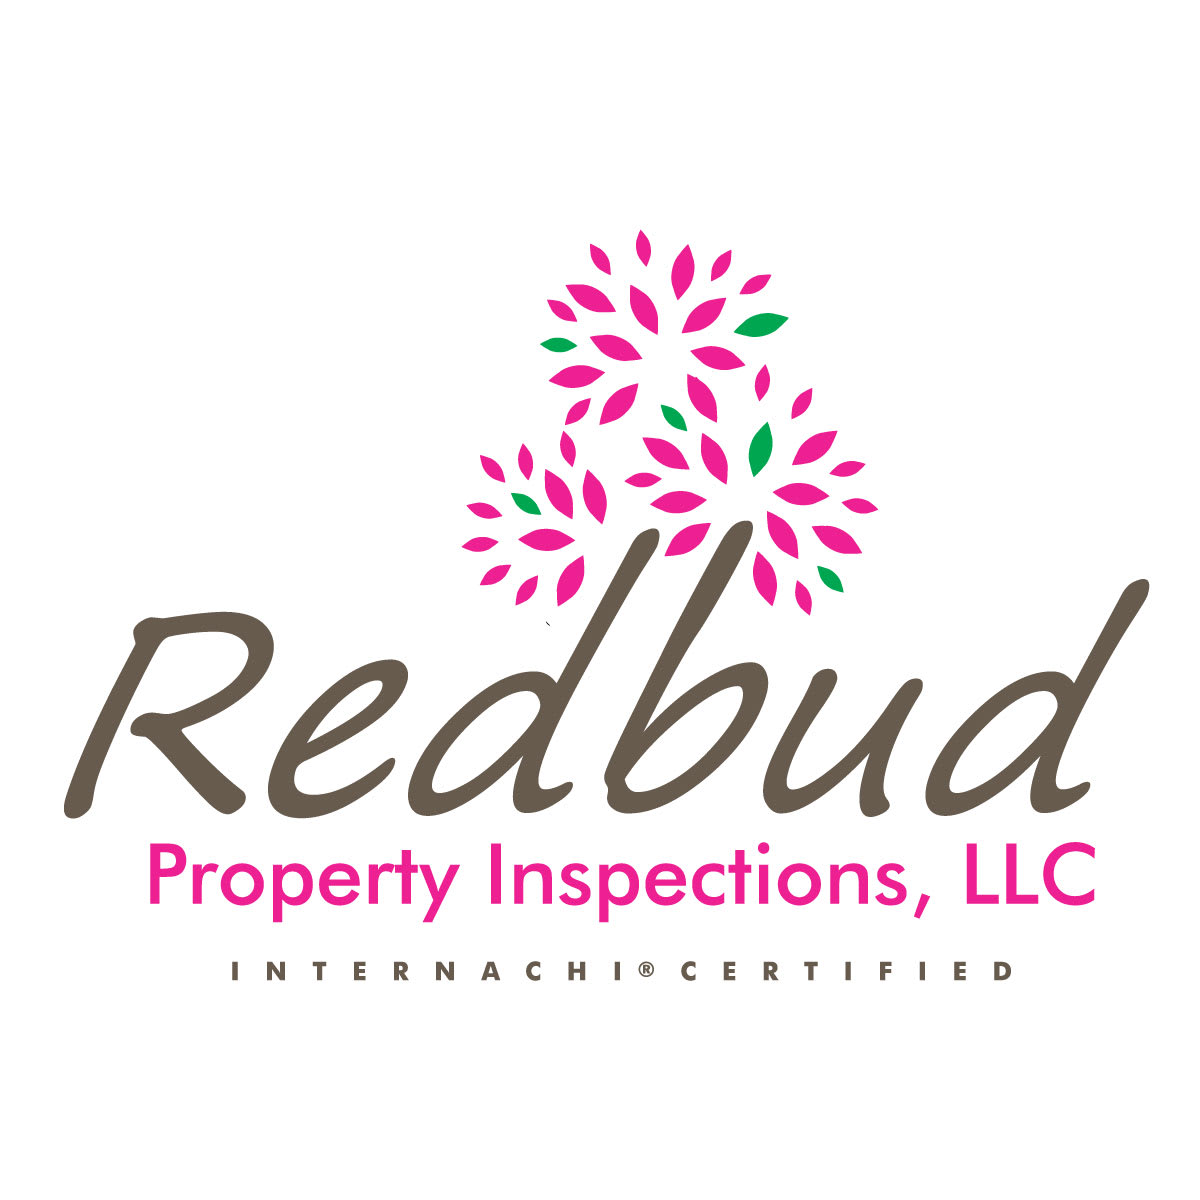 Redbud Property Inspections, LLC Logo